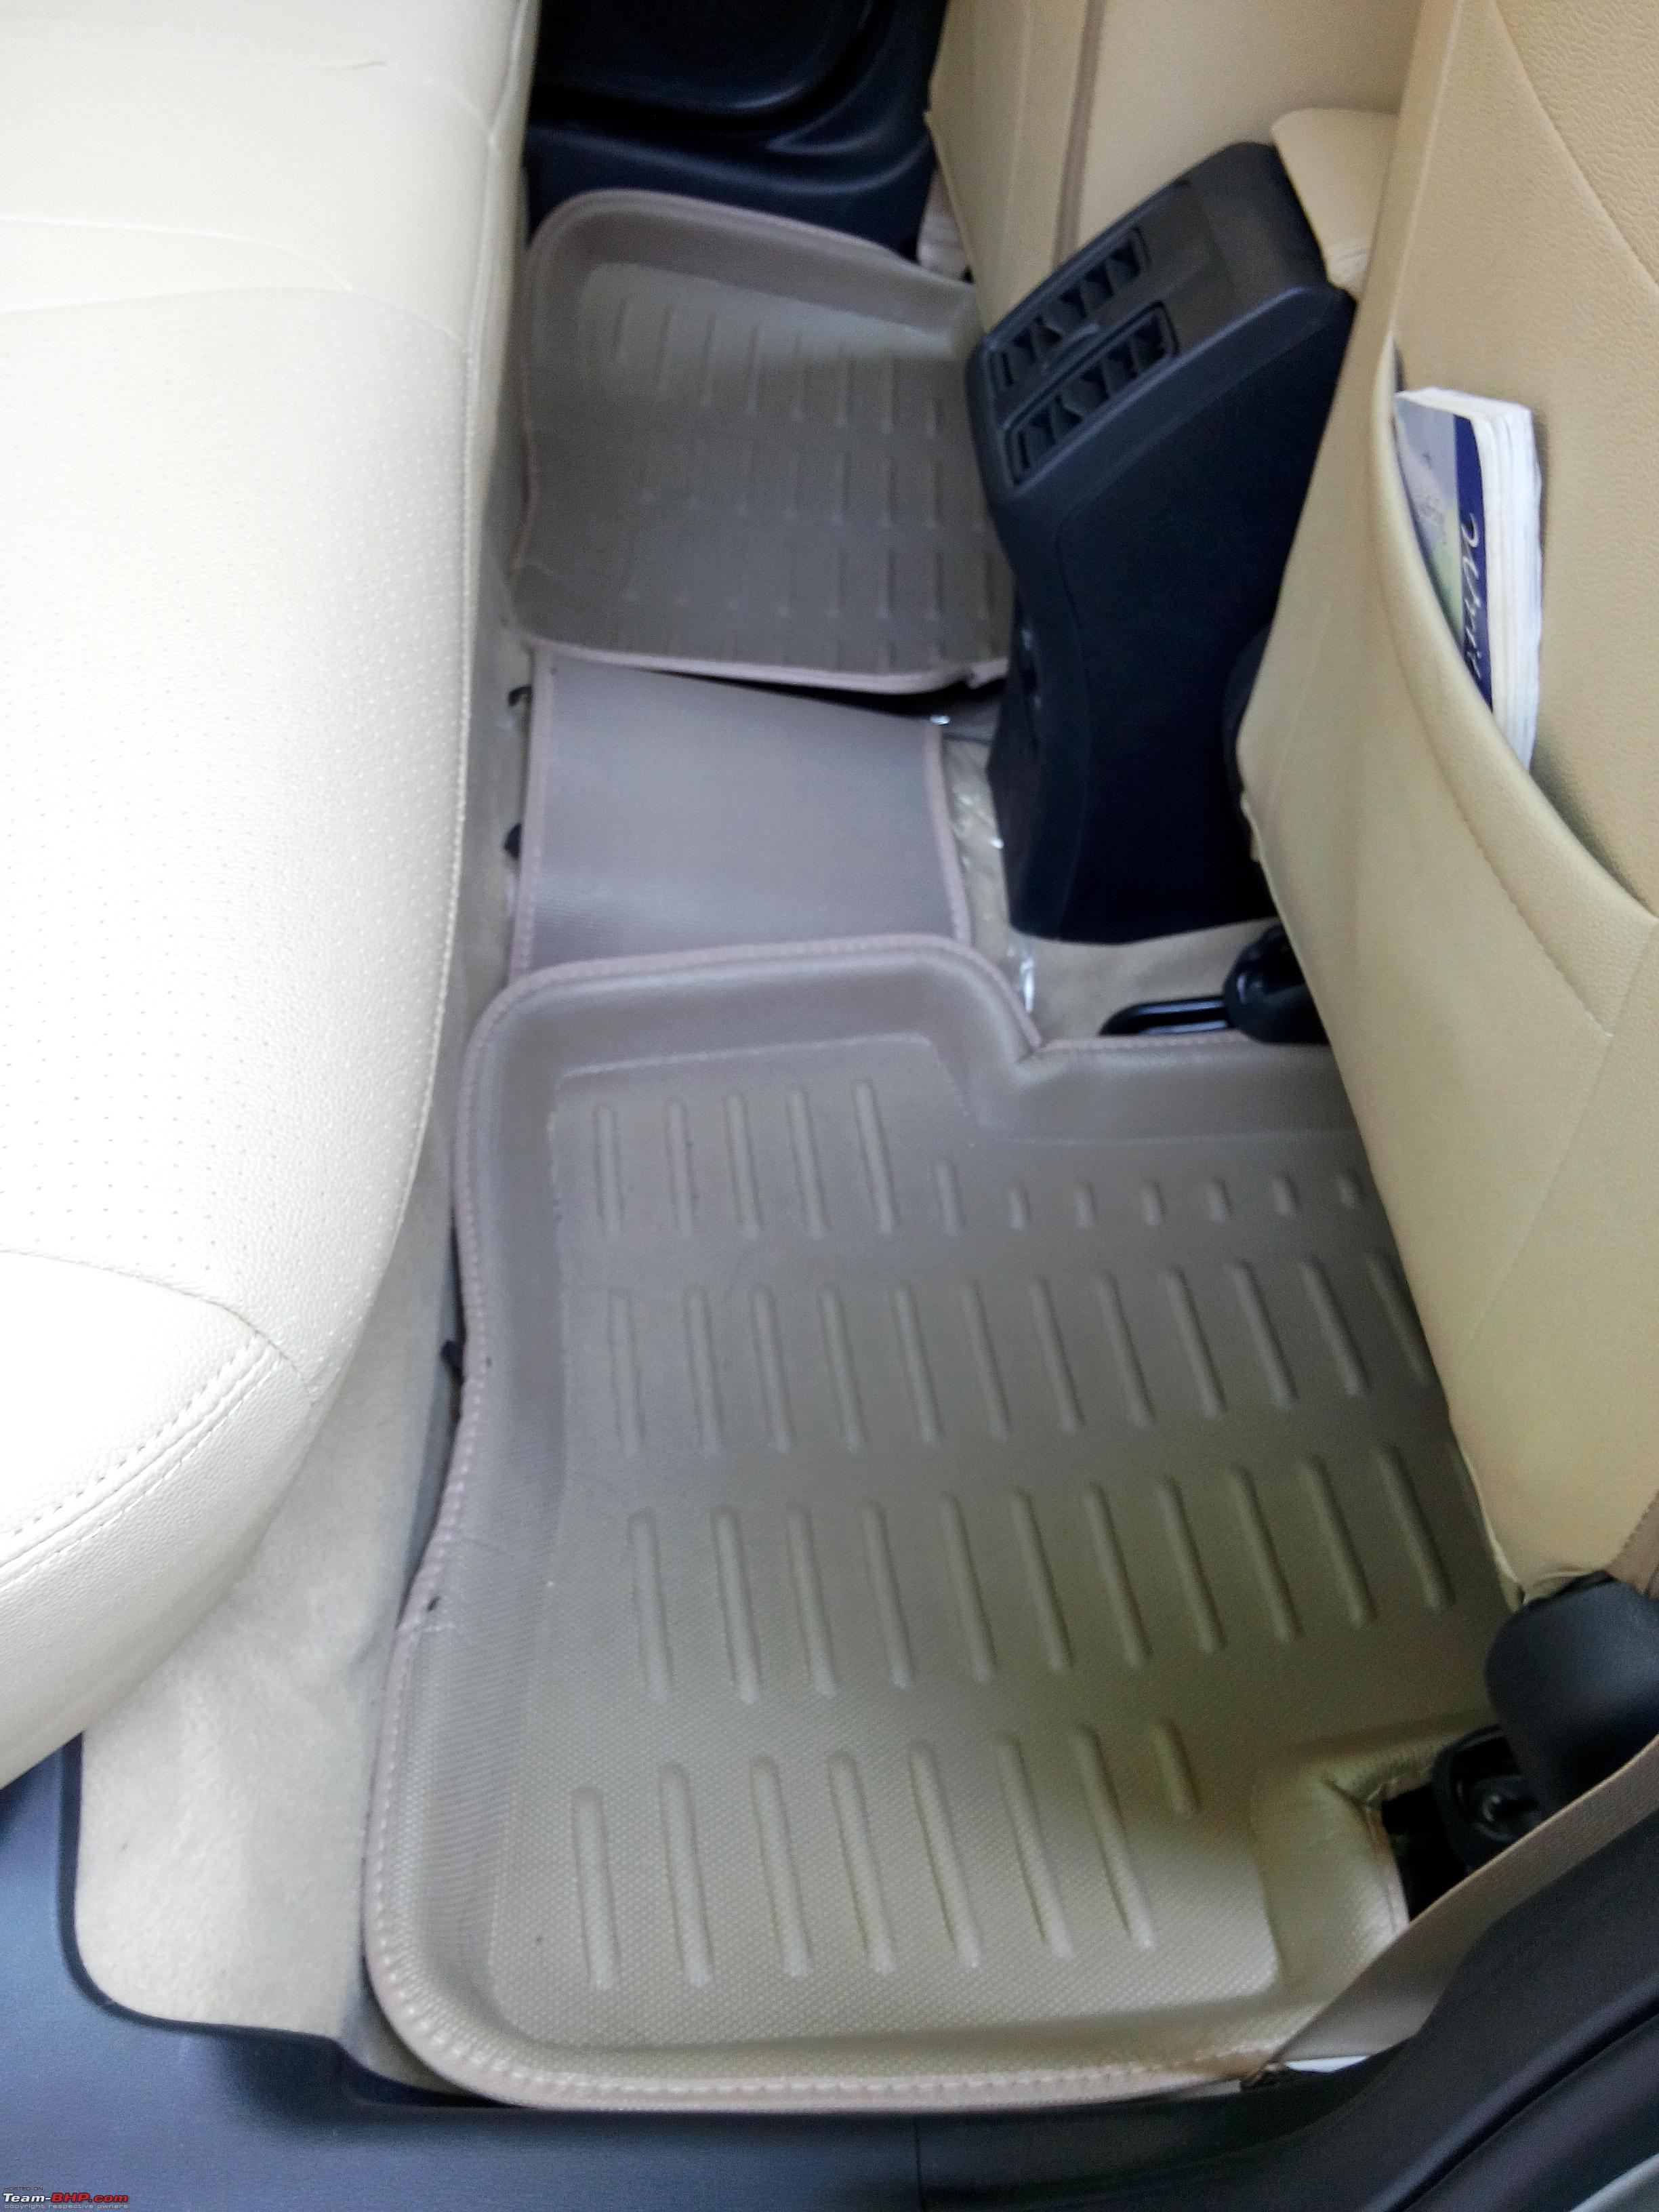 Buy Amron Backrest Executive On Car Seat Online - Best Price Amron Backrest  Executive On Car Seat - Justdial Shop Online.